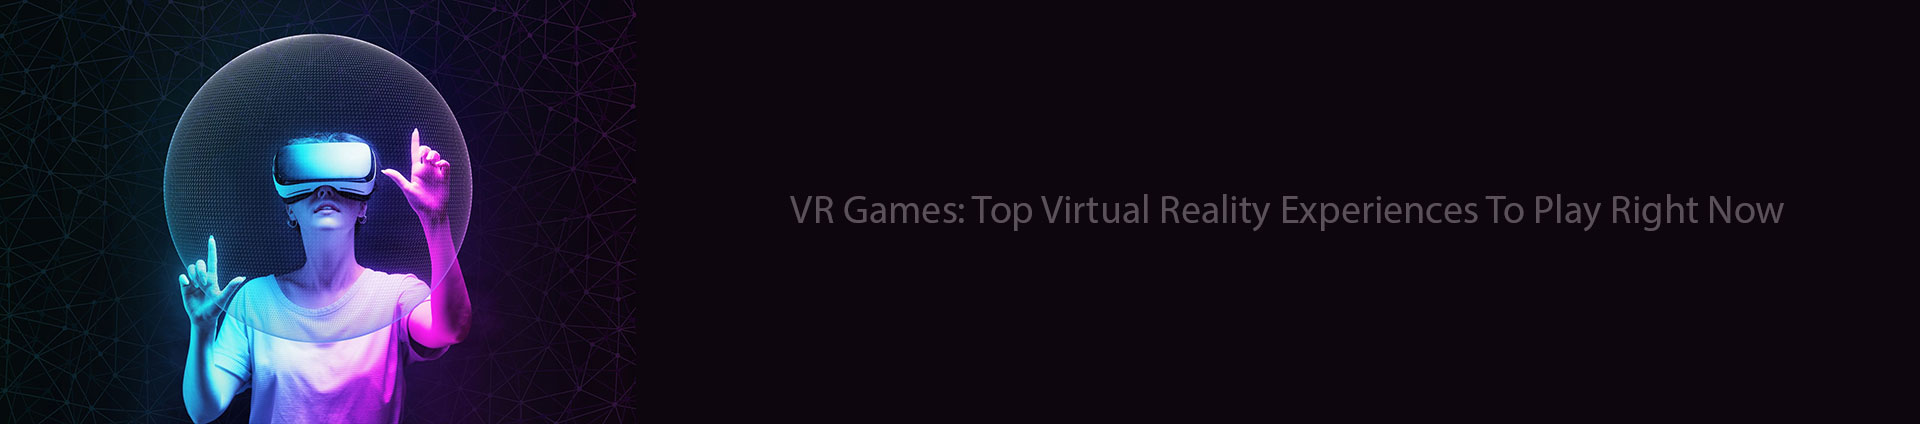 Top 6 Games to Play Virtually